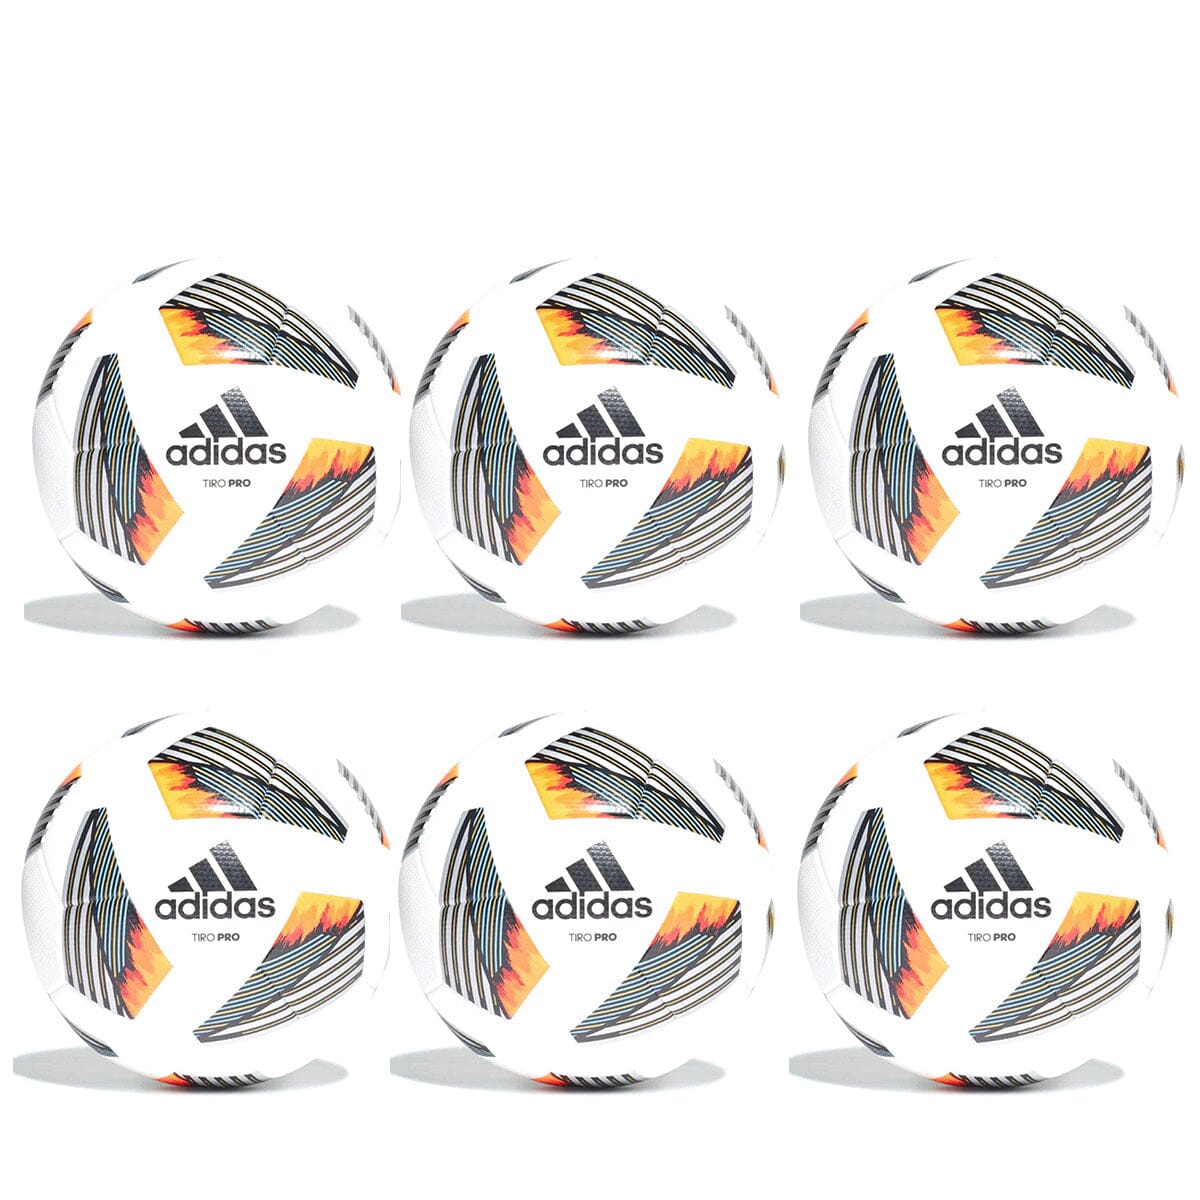 adidas soccer balls | Match | Training | World Cup